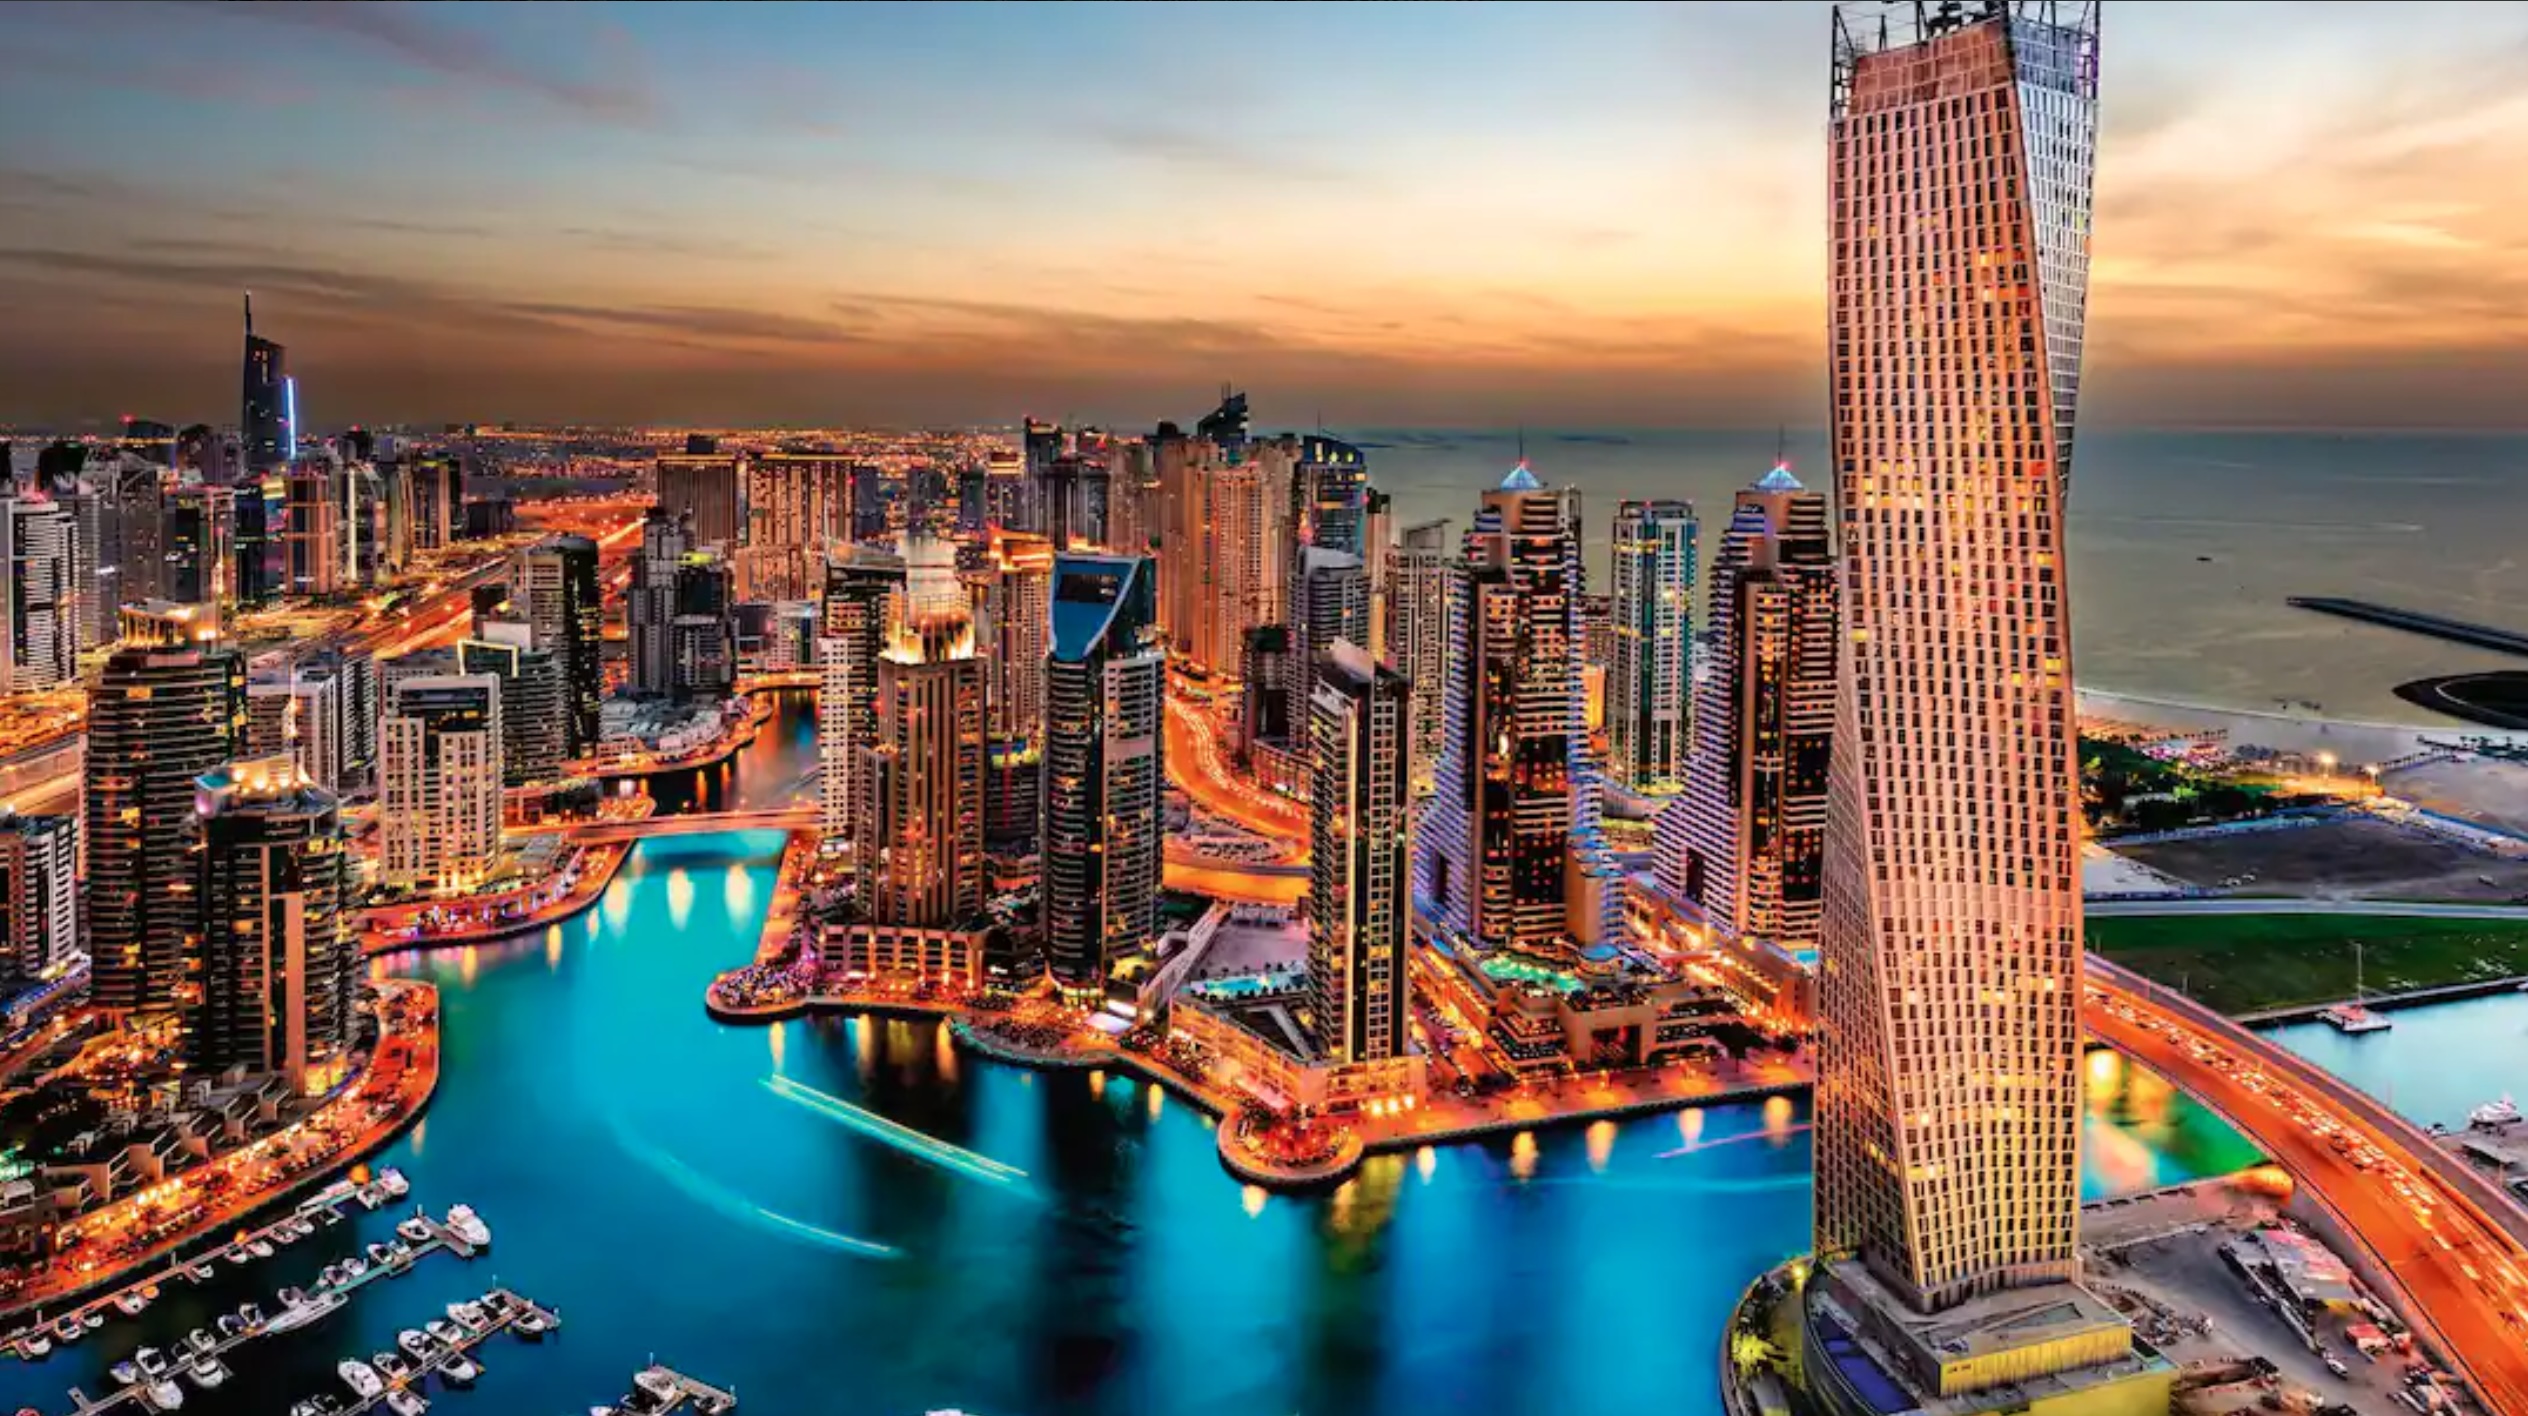 Evening cityscape of Dubai, taken from Burj Khalifa